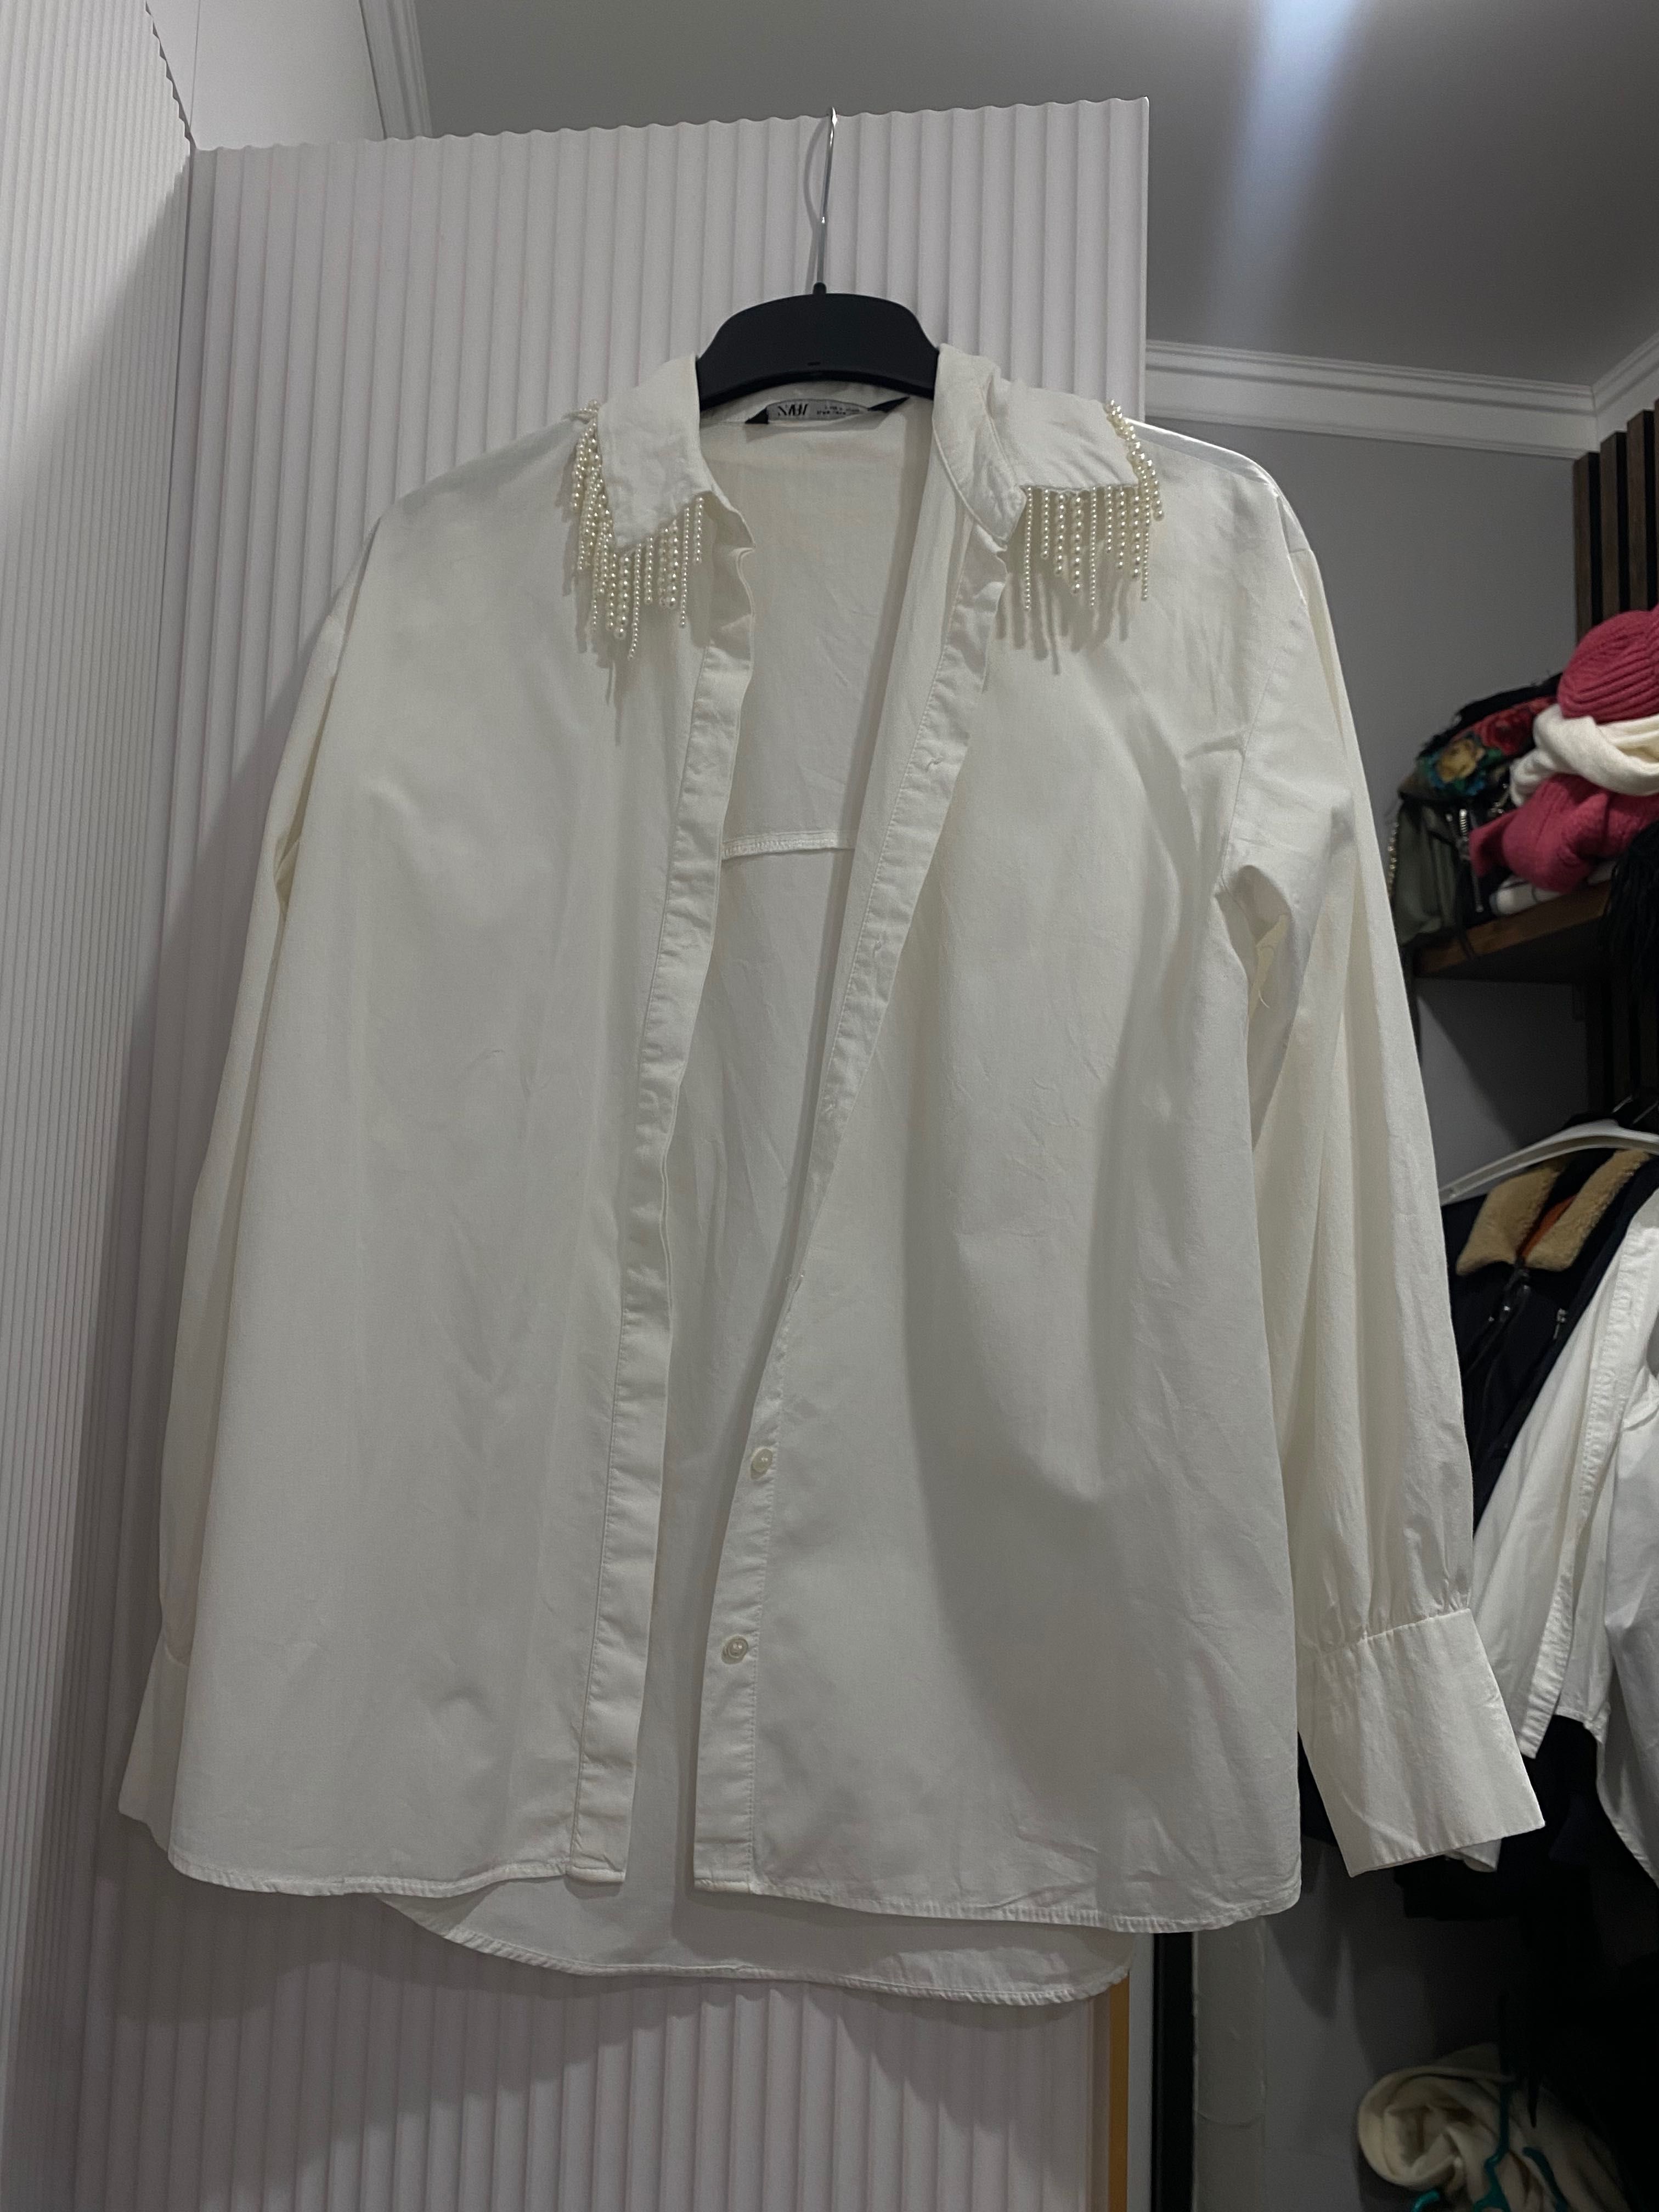 Пиджак, рубашки, брюки, свитера Zara, Mango от 500 тенге